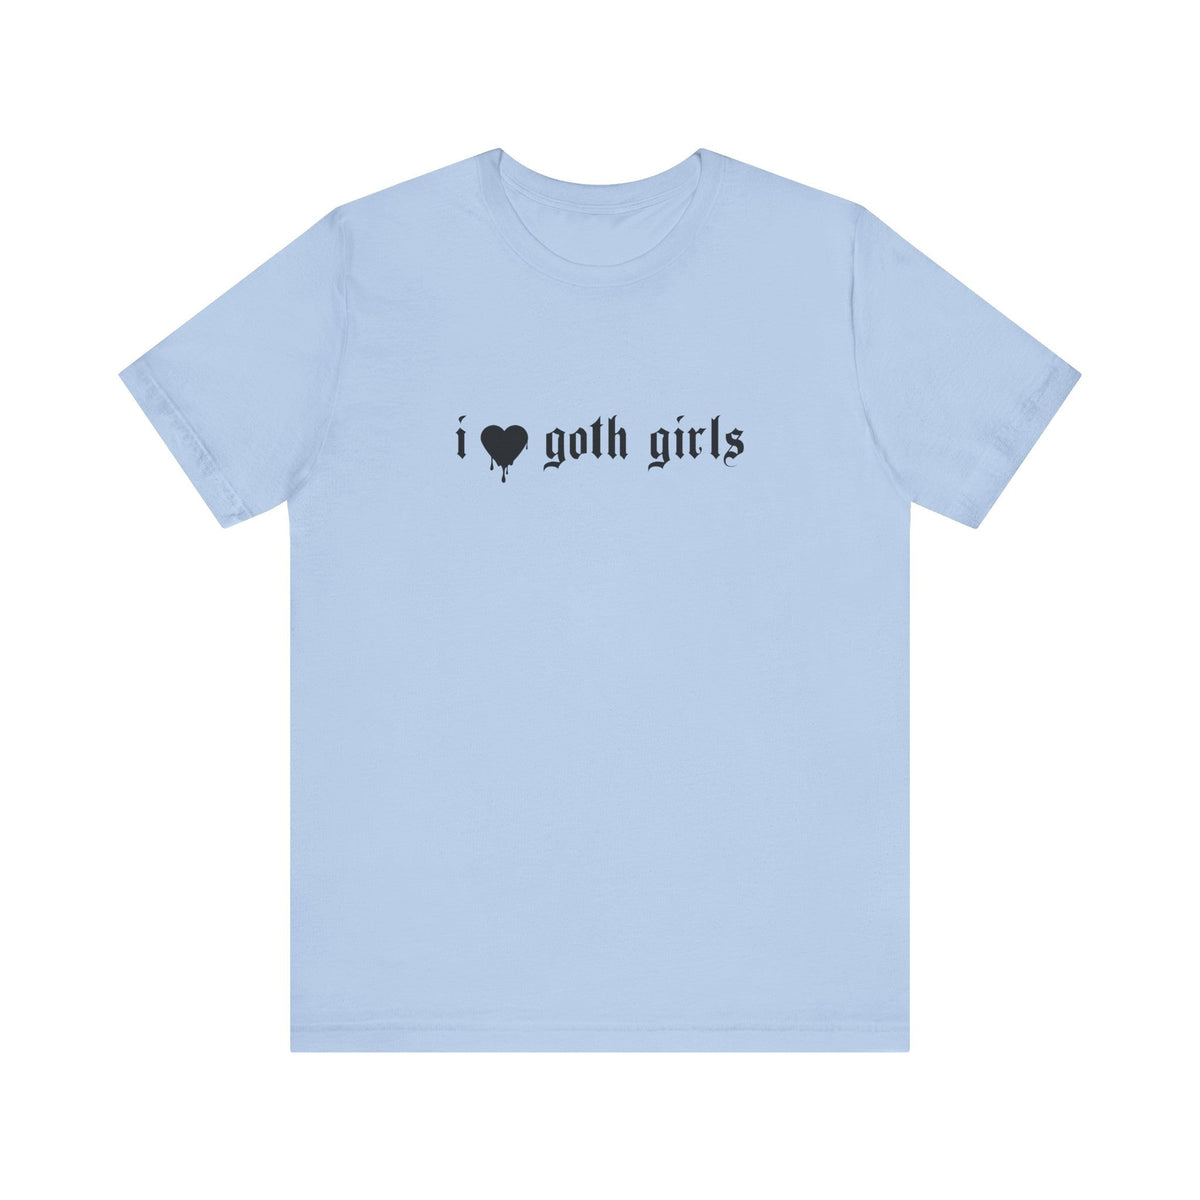 I Love Goth Girls T - Shirt - Goth Cloth Co.T - Shirt11456256084043226256